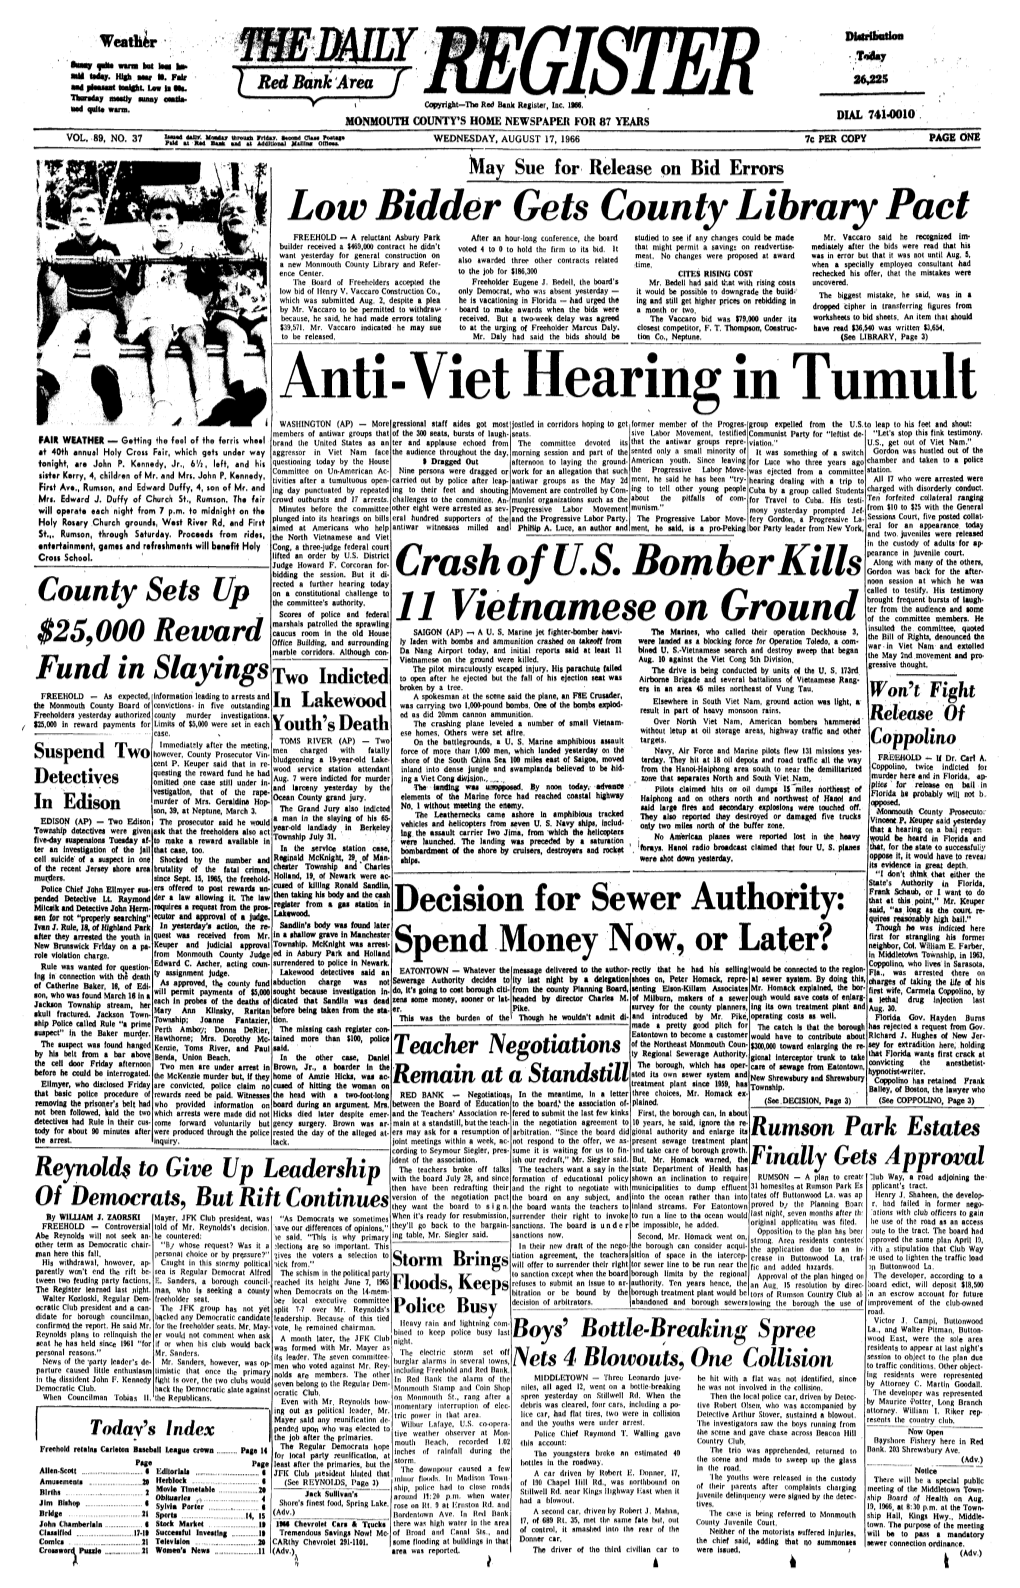 Anti-Viet Hearing in Tumult